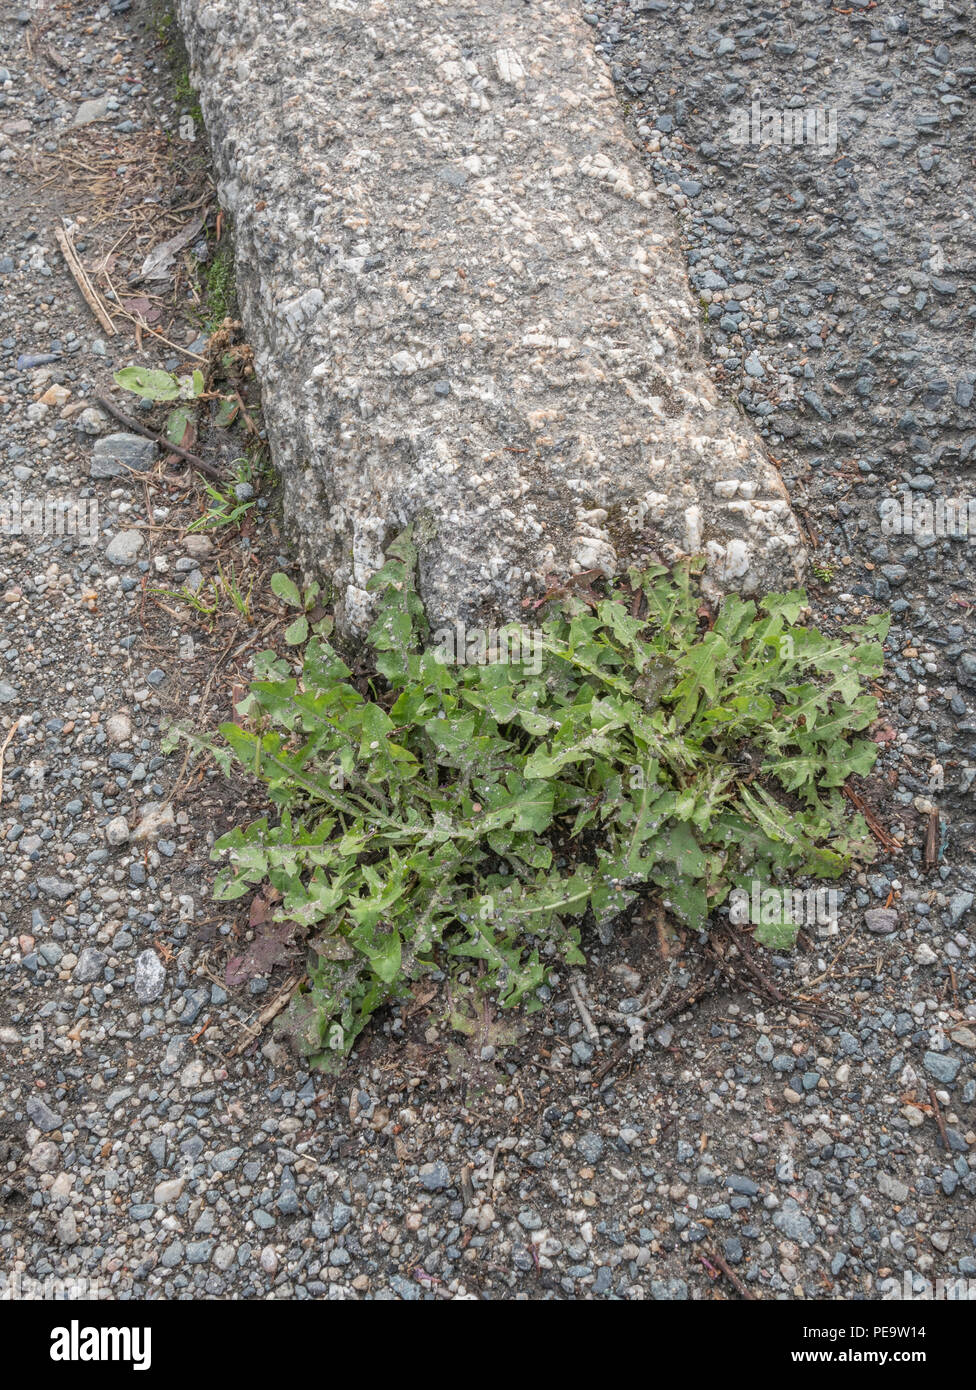 Weeds growing out of kerbside / roadside pavement cracks in urban surroundings. Metaphor weedkiller Roundup / Glyphosate, plants growing in cracks. Stock Photo